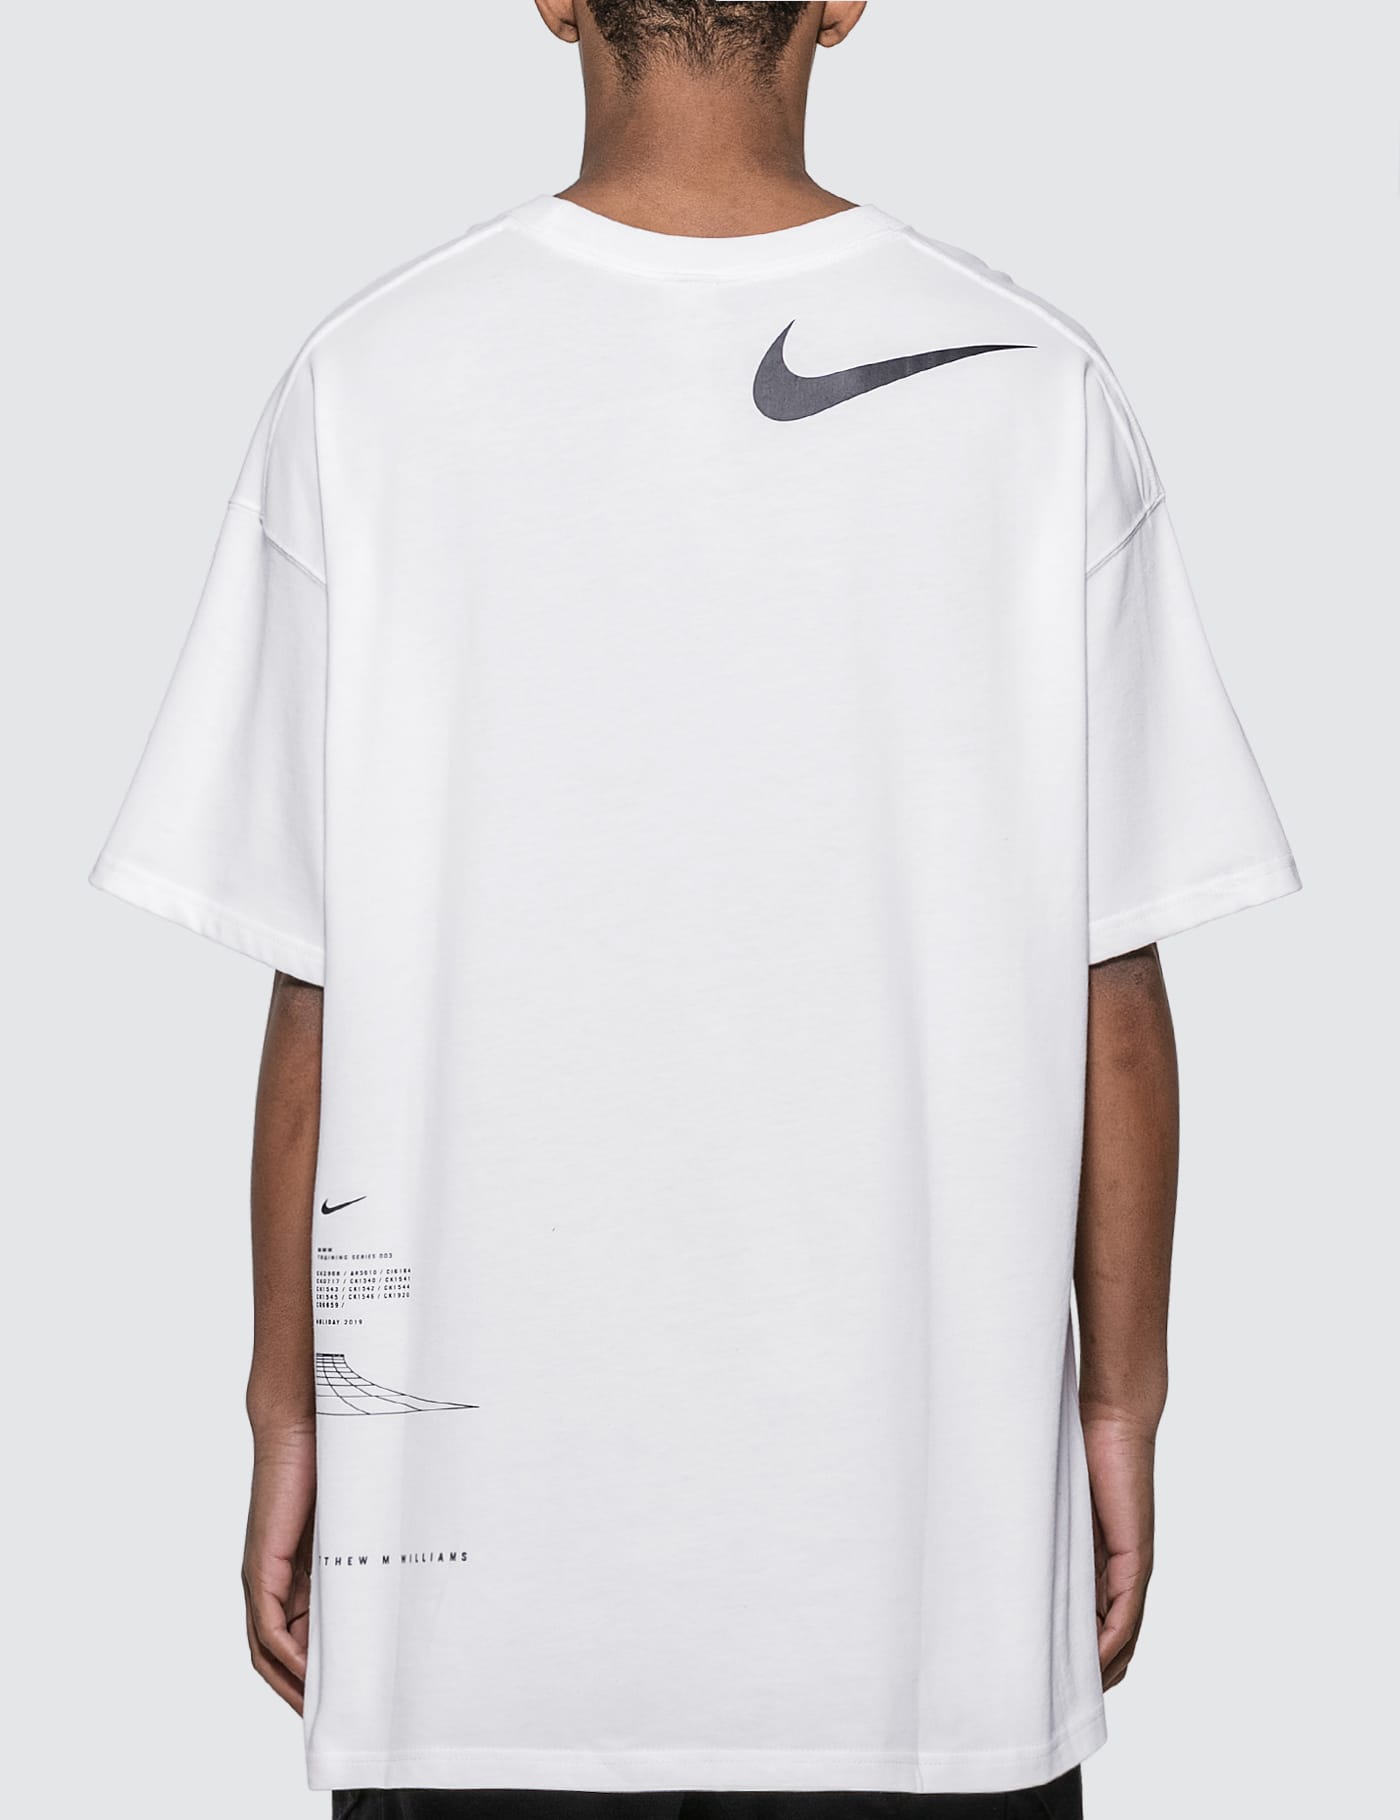 Nike - Nike x MMW SE T-shirt | HBX - Globally Curated Fashion and